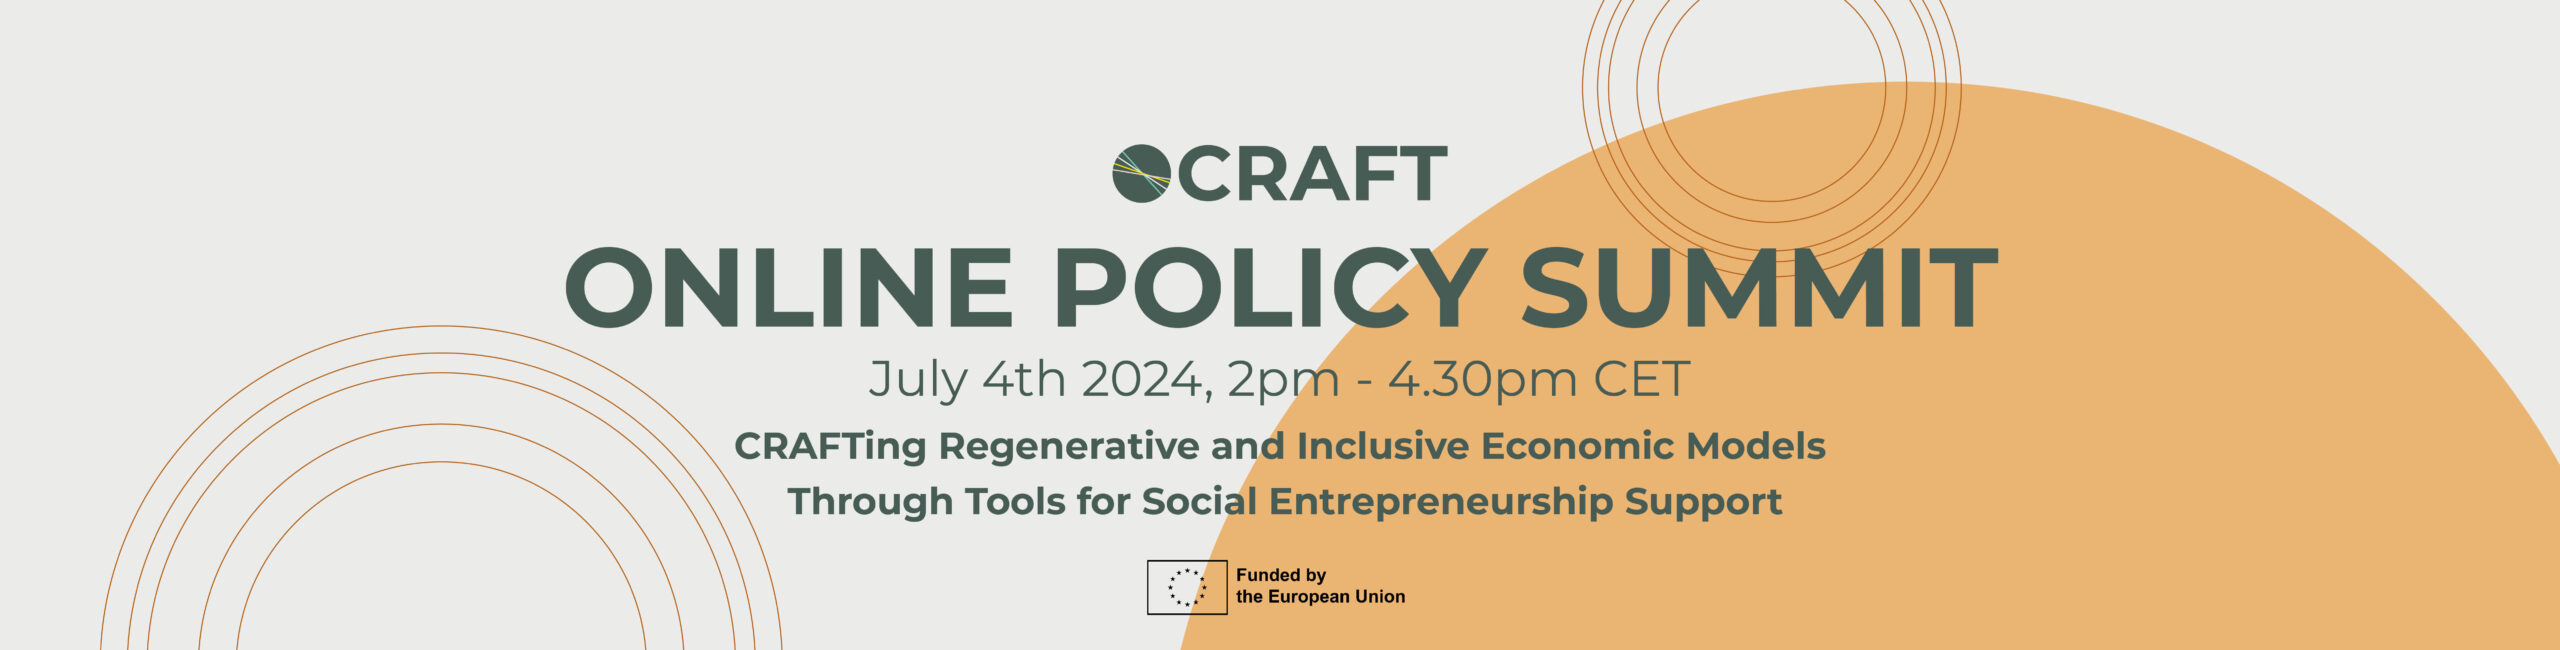 CRAFT online Policy Summit 4 July 2024, 2:00 - 4:30pm (CET)